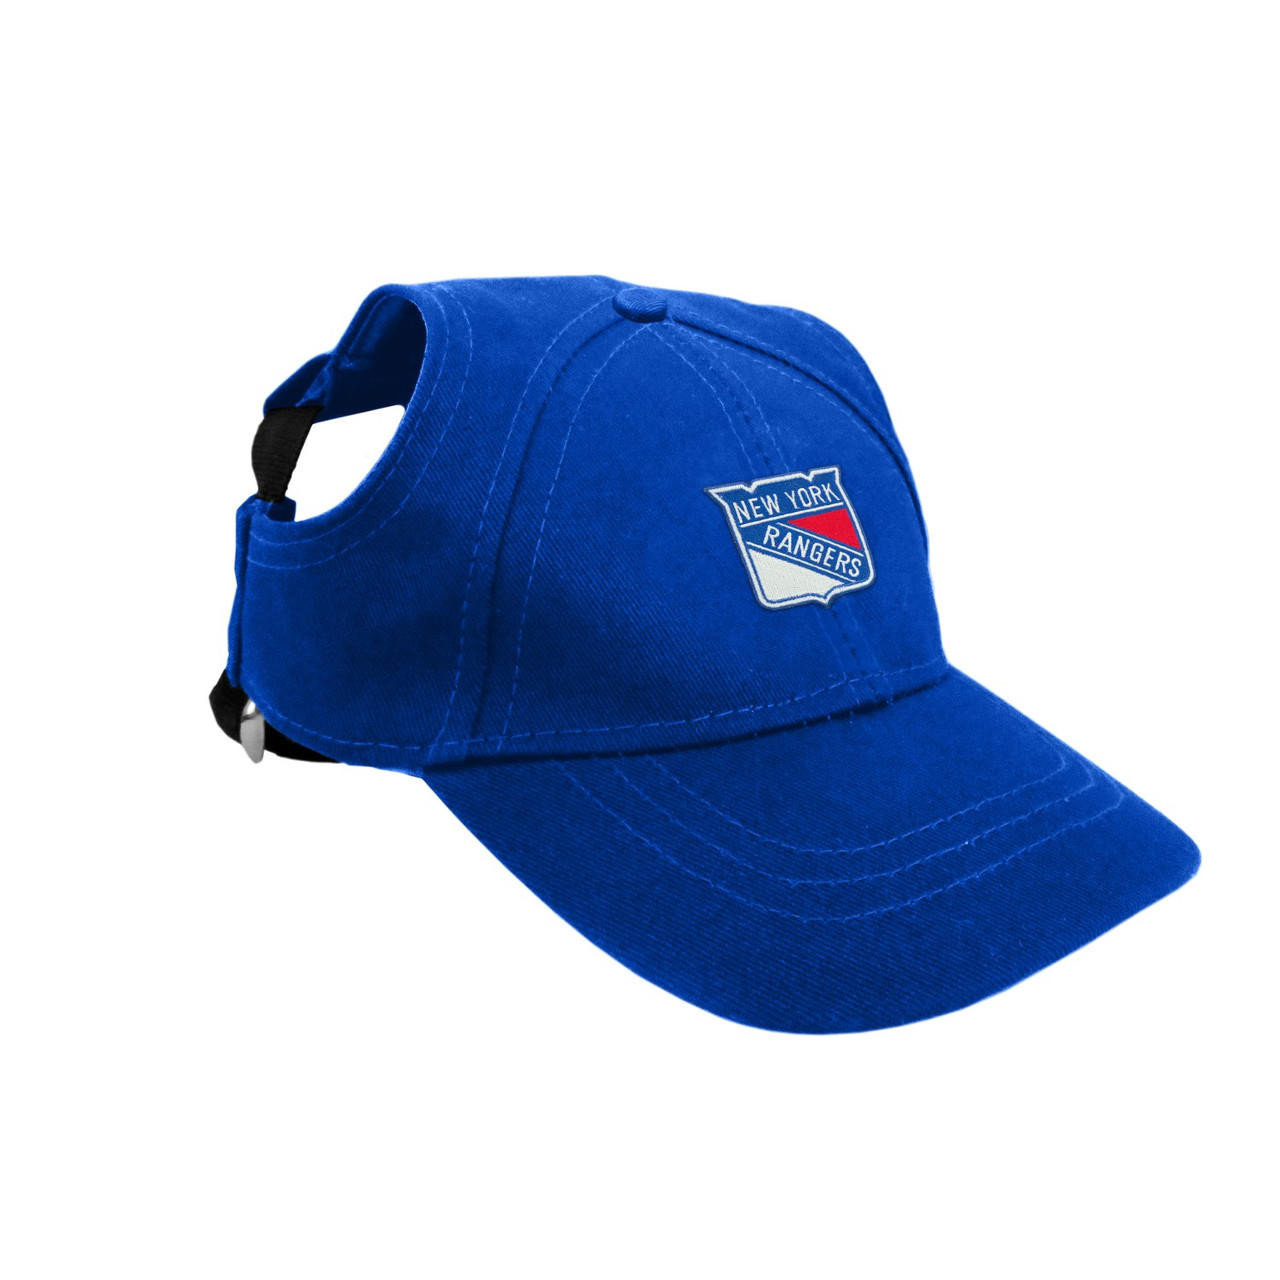 New York Rangers Pet Baseball Hat - Small